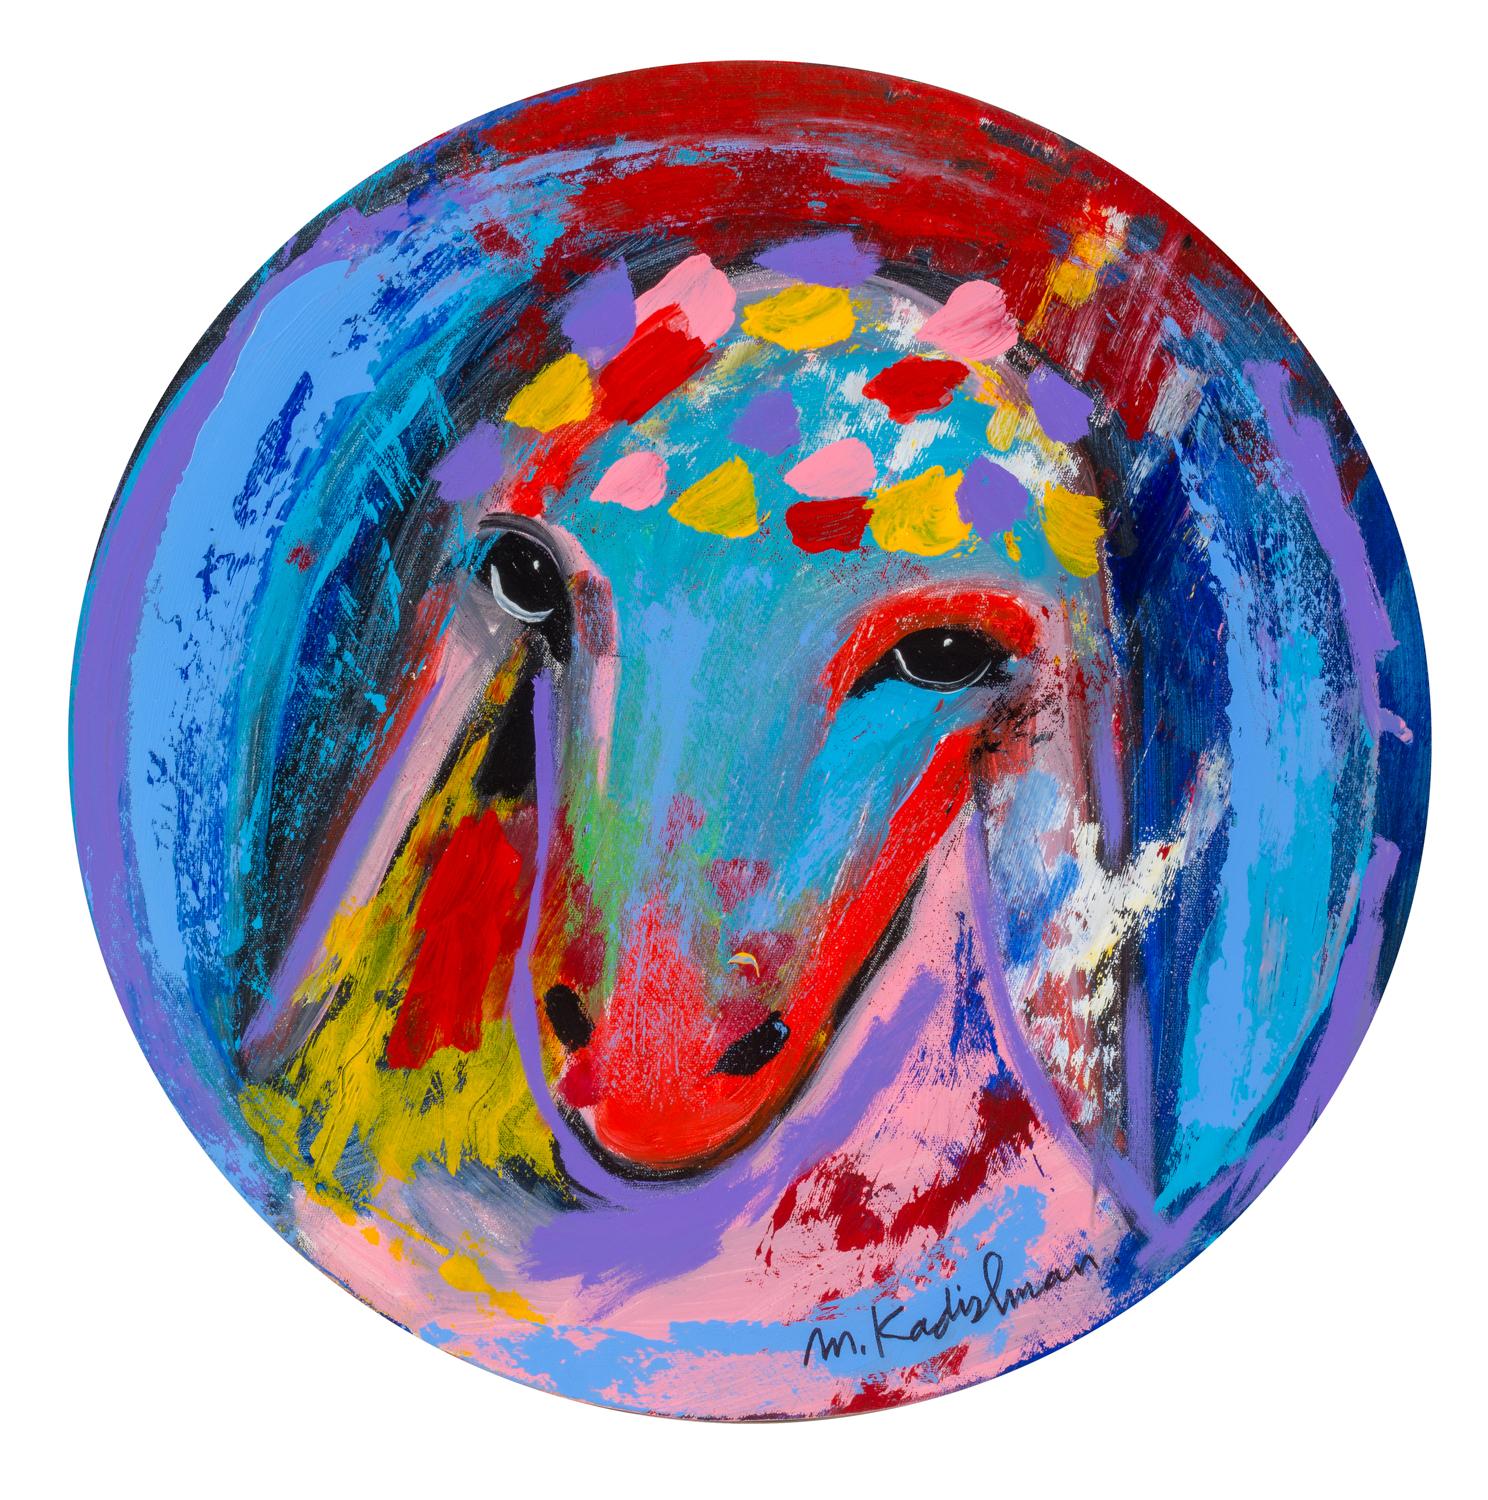 Menashe Kadishman, Sheep head 26 circle painting, Acrylic on canvas